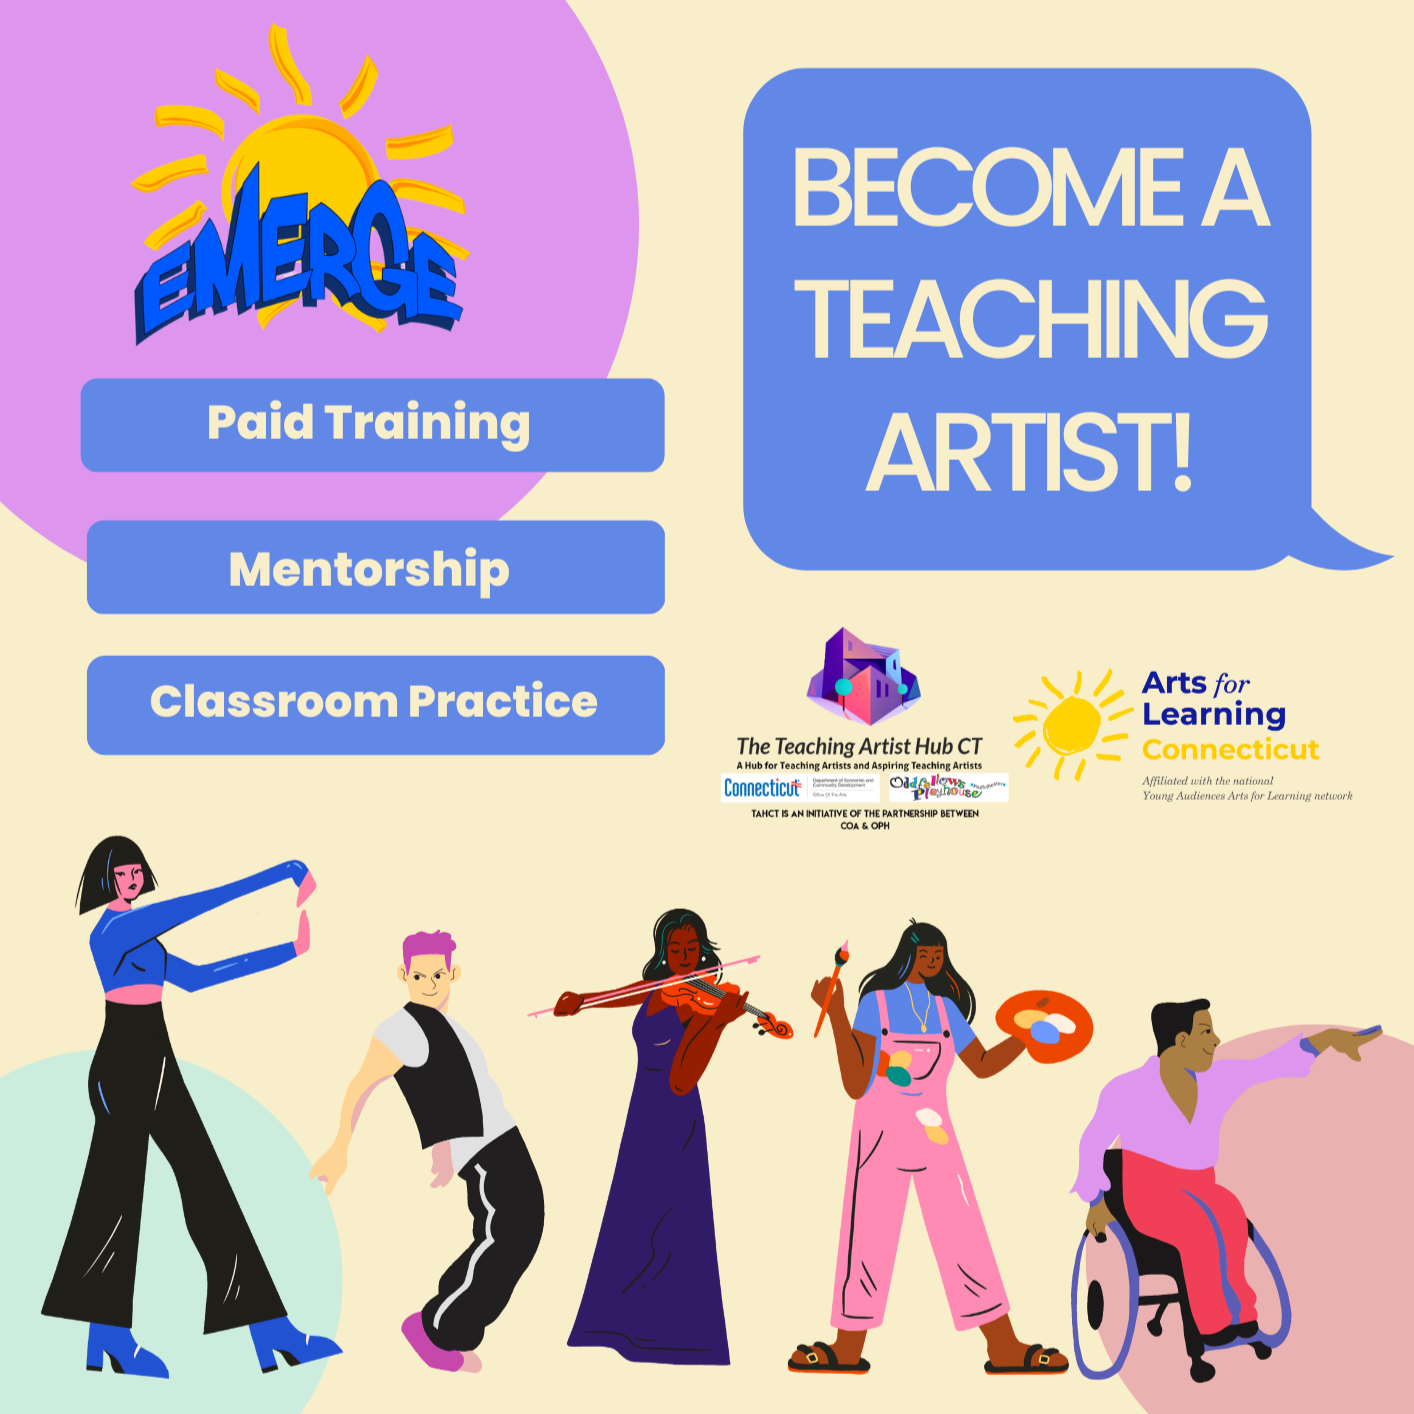 “Emerge” – Training and mentorship program for emerging Teaching Artists